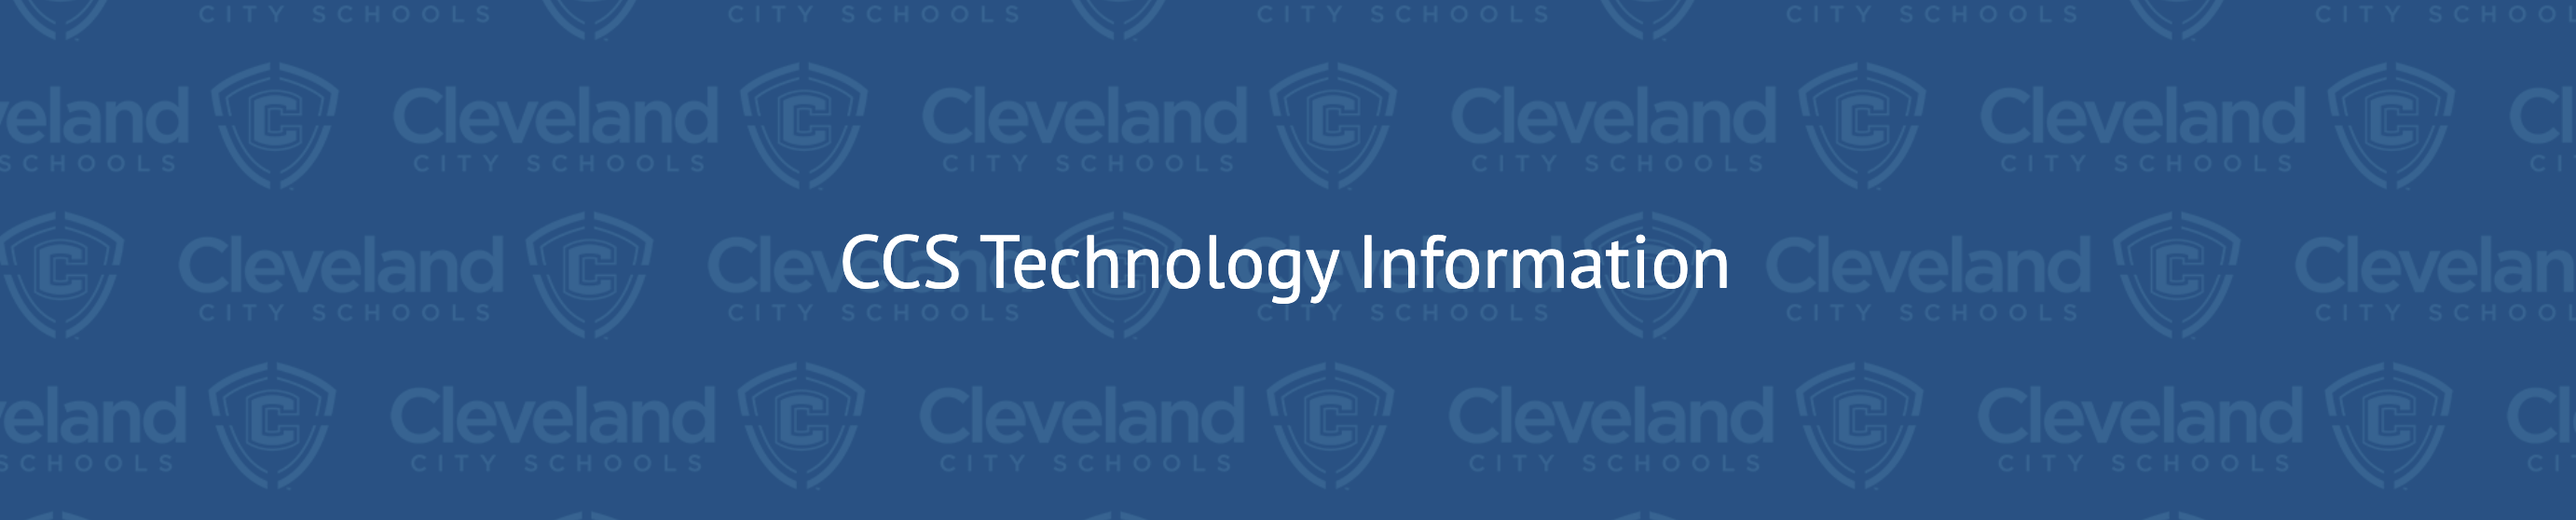 CCS Technology Information